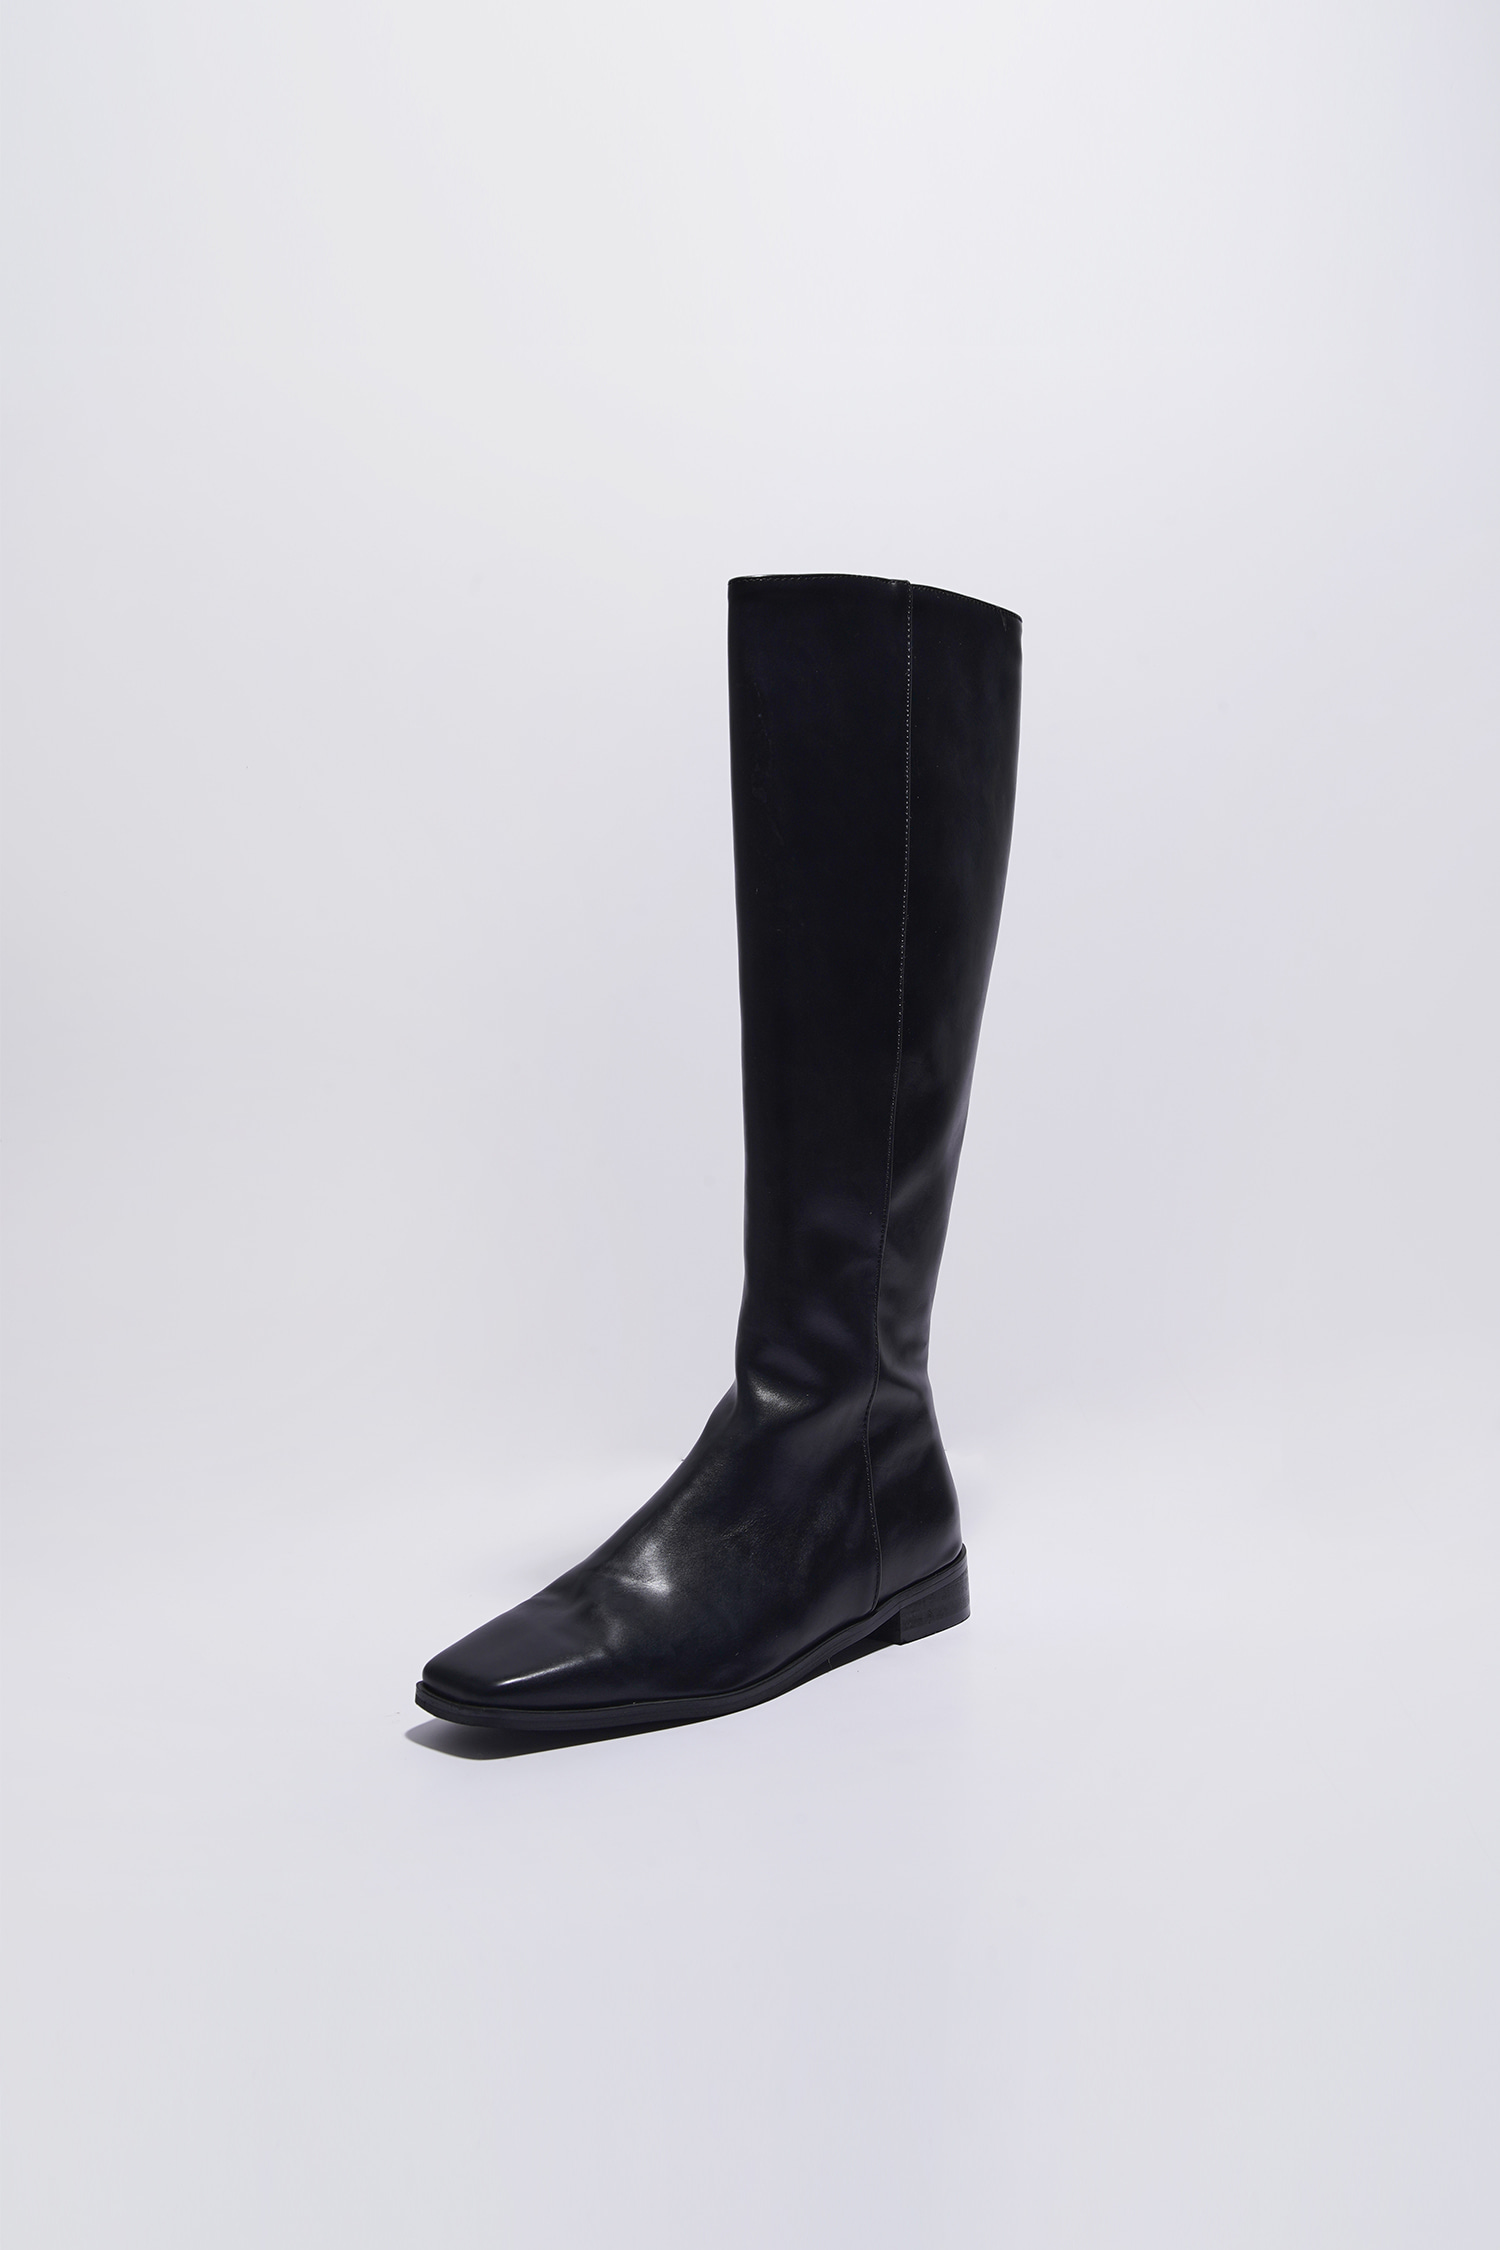 Clair square boots - black